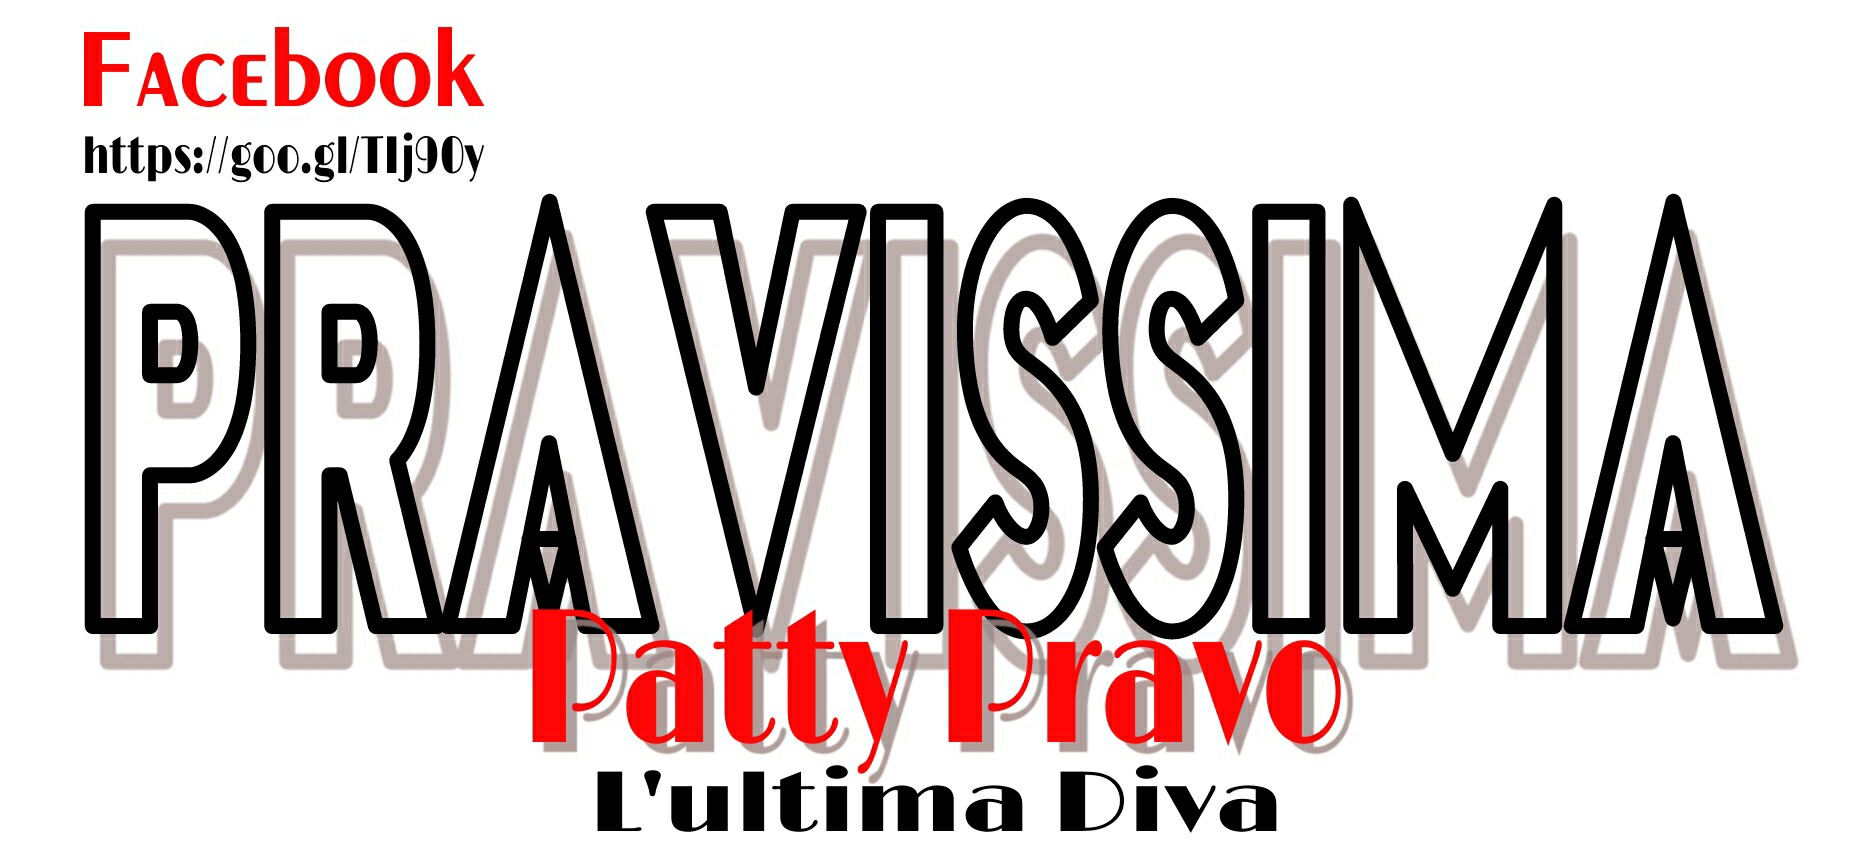 PRAVISSIMA – Patty Pravo – L'Ultima Diva – Facebook